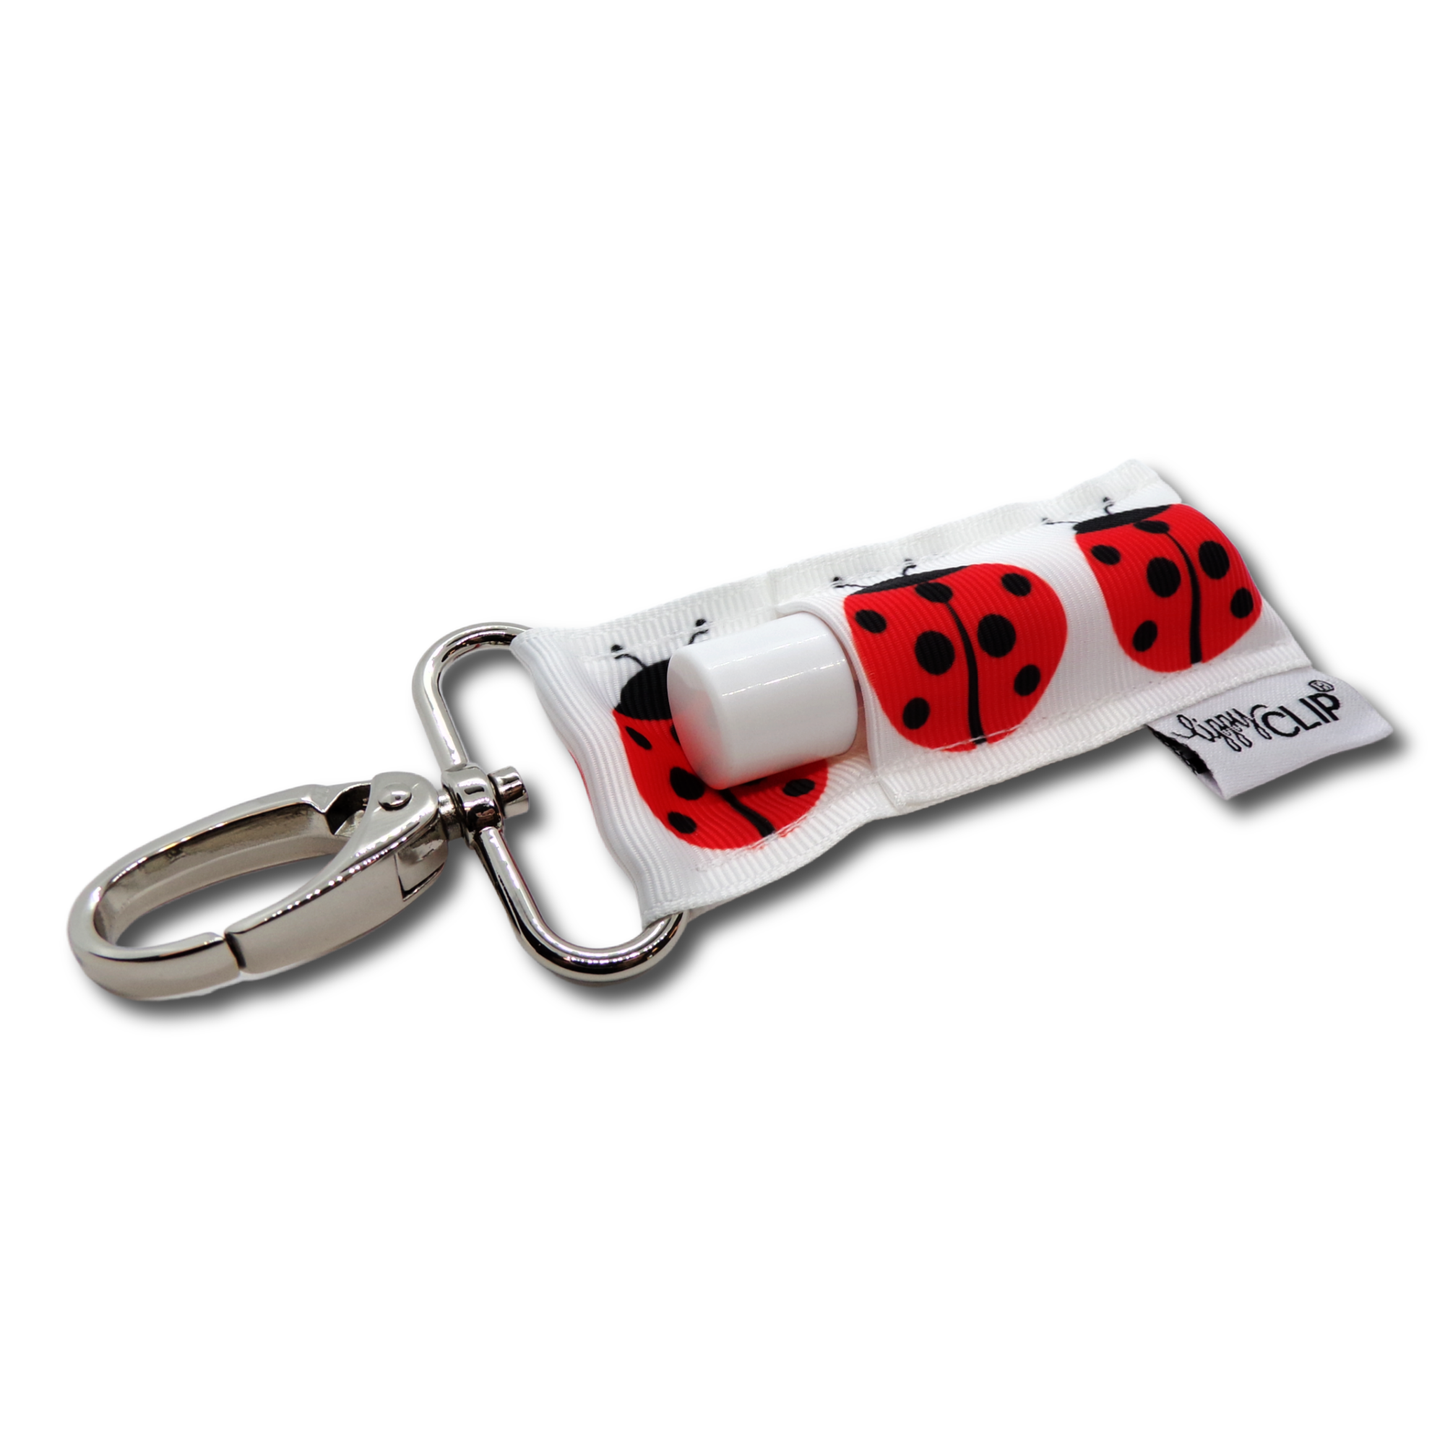 Ladybug LippyClip® Lip Balm Holder for Chapstick